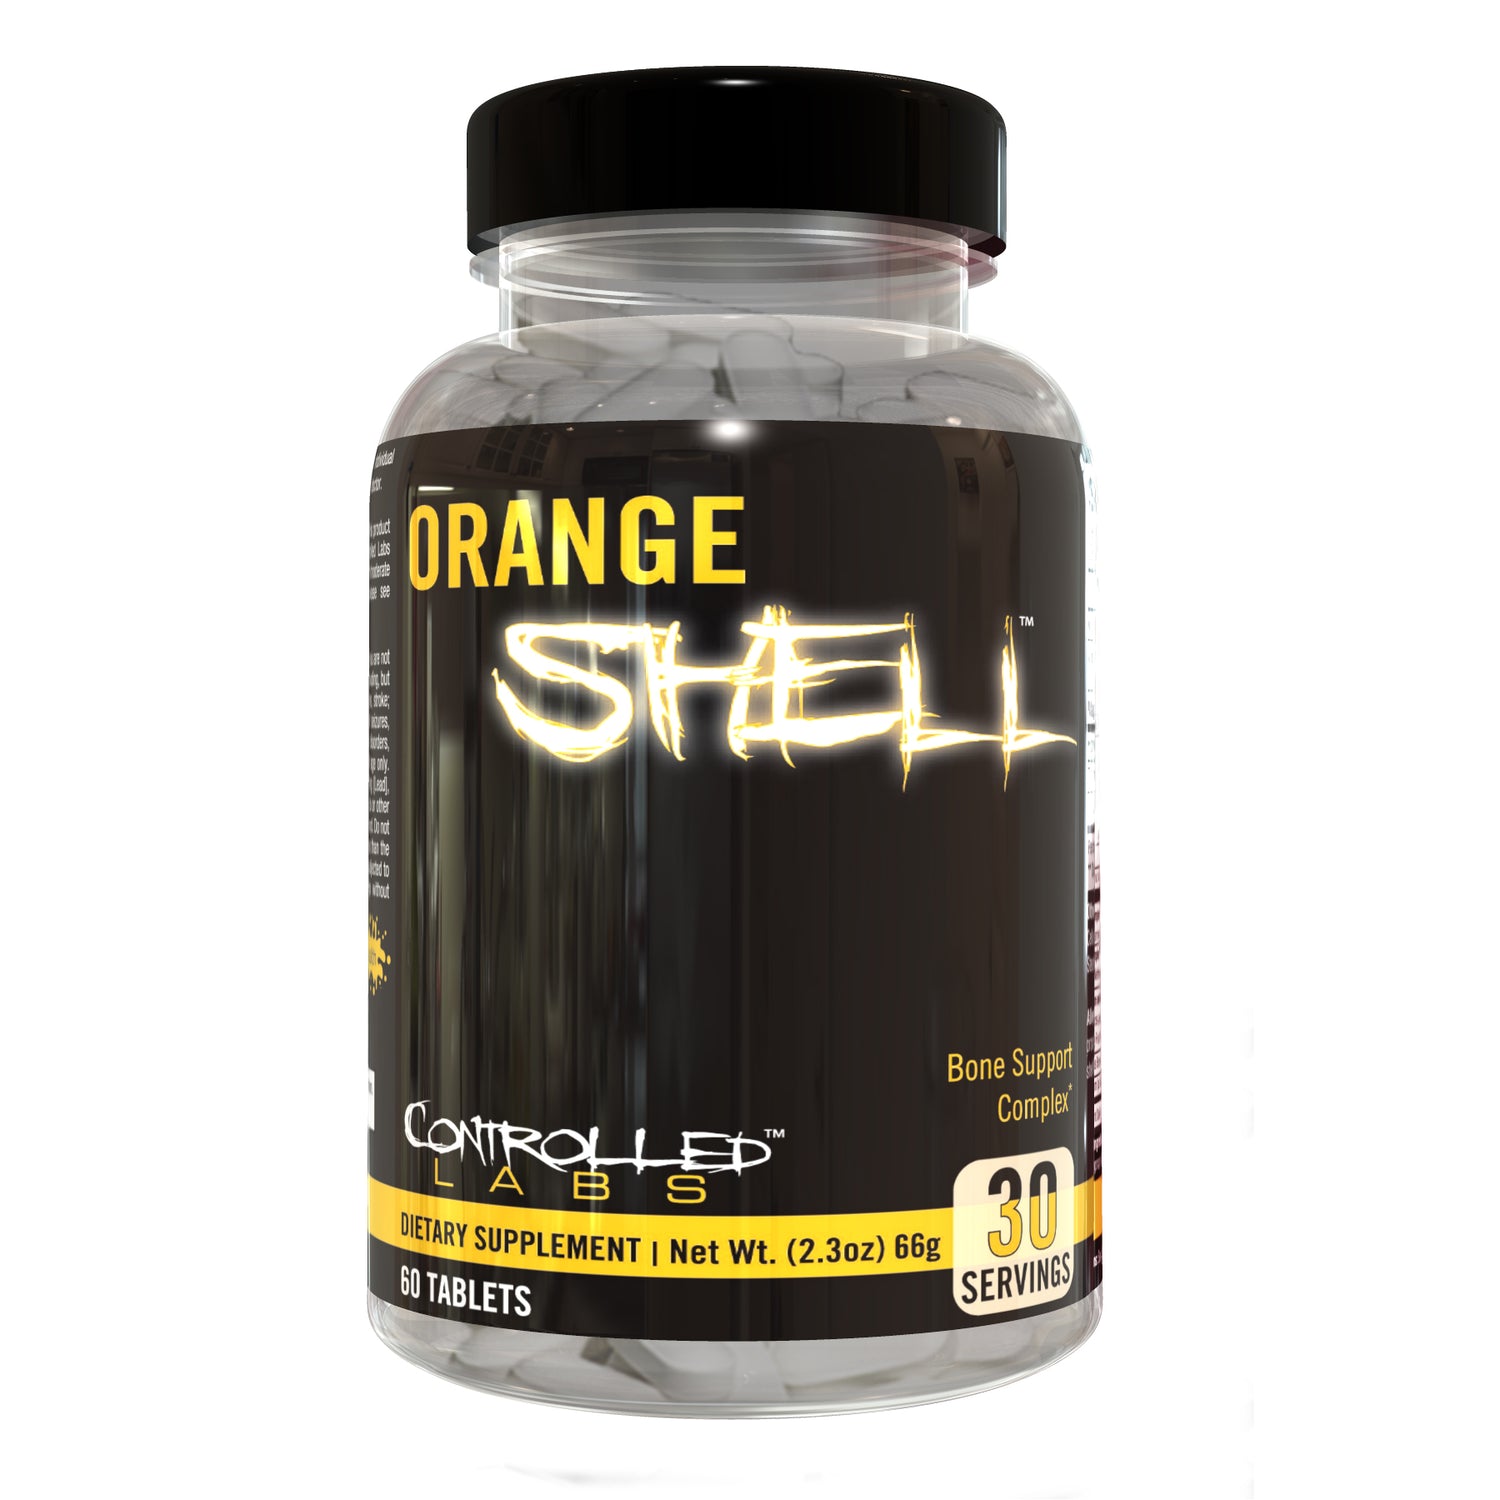 orange shell